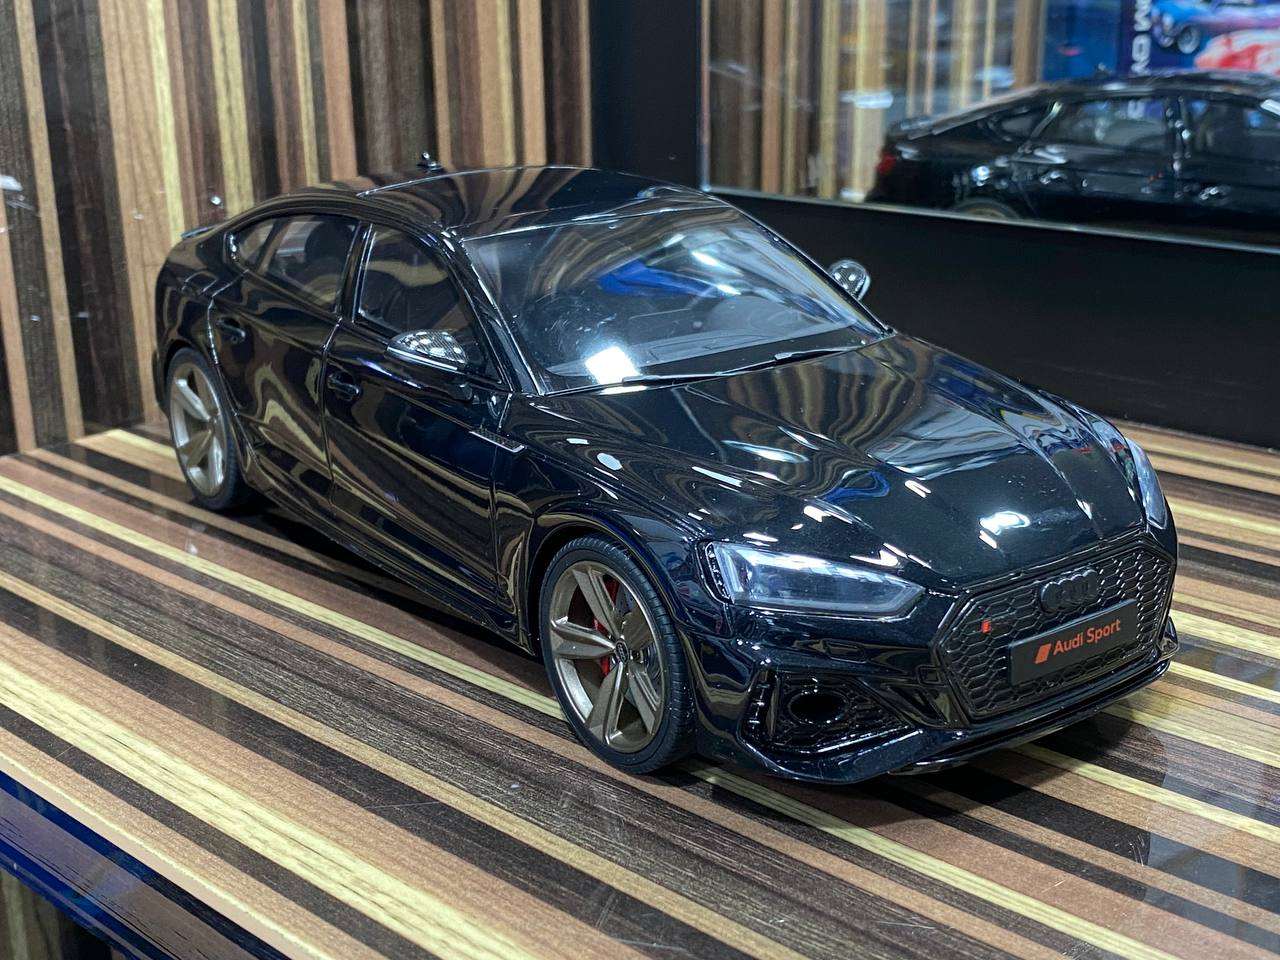 1/18 Diecast Audi RS5 Sport GT Spirit Scale Model Car